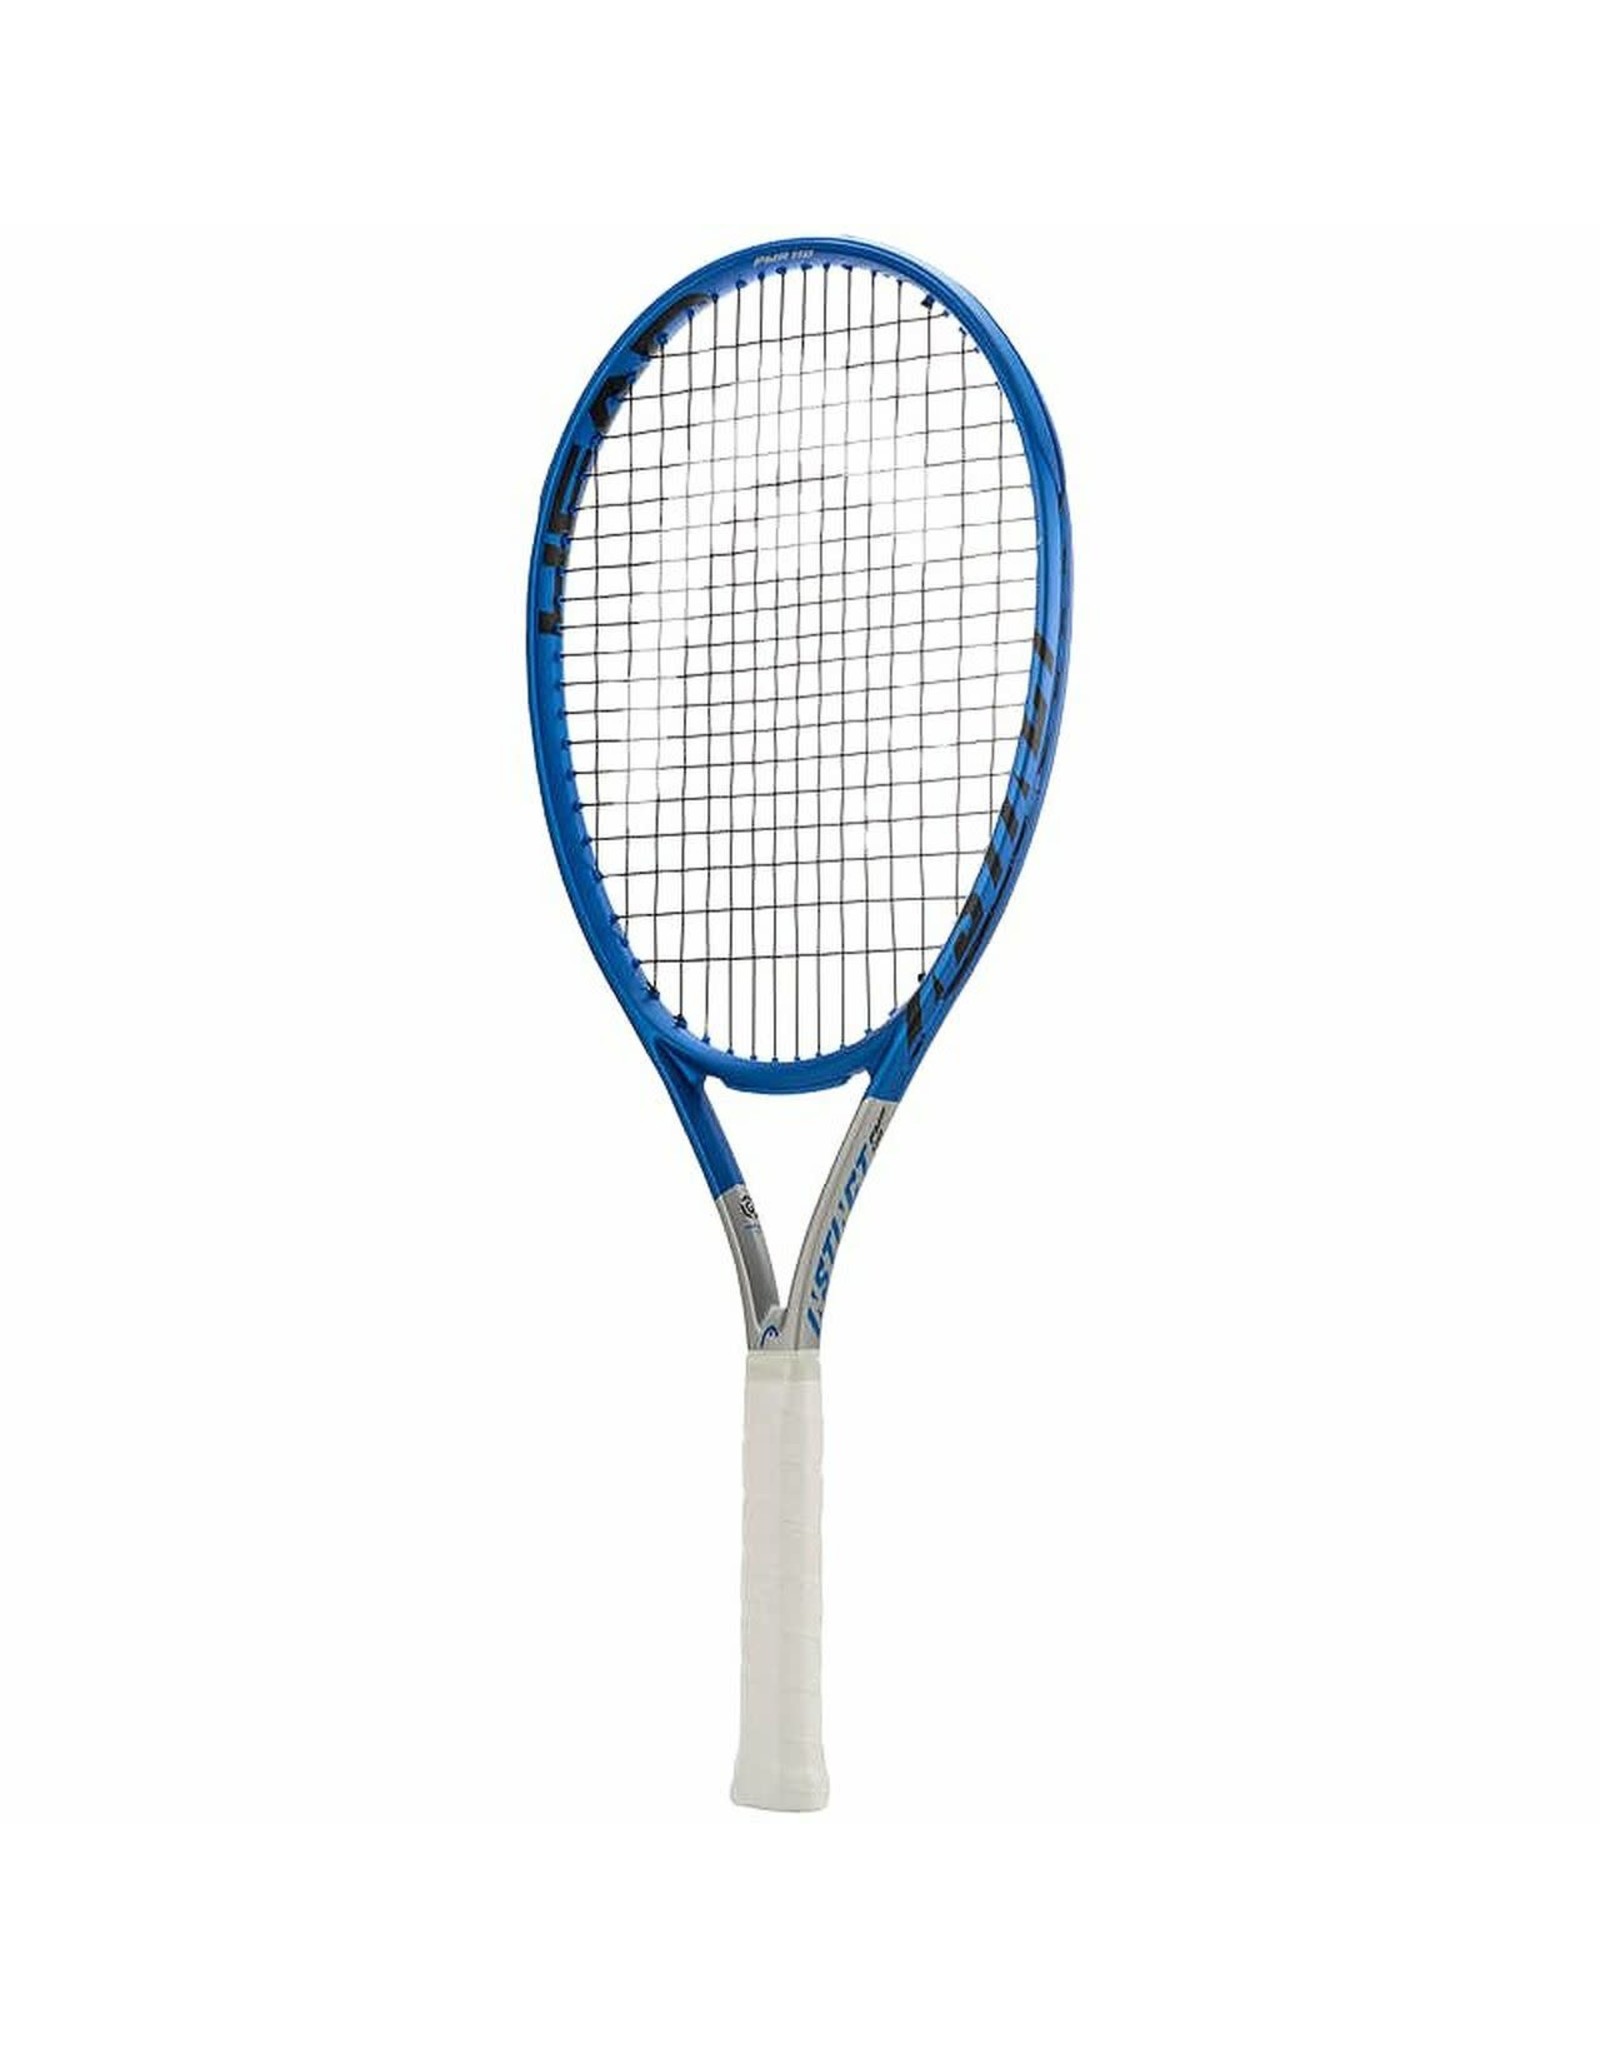 Head Head Graphene 360+ Instinct PWR 110 (2022) Tennis Racquet